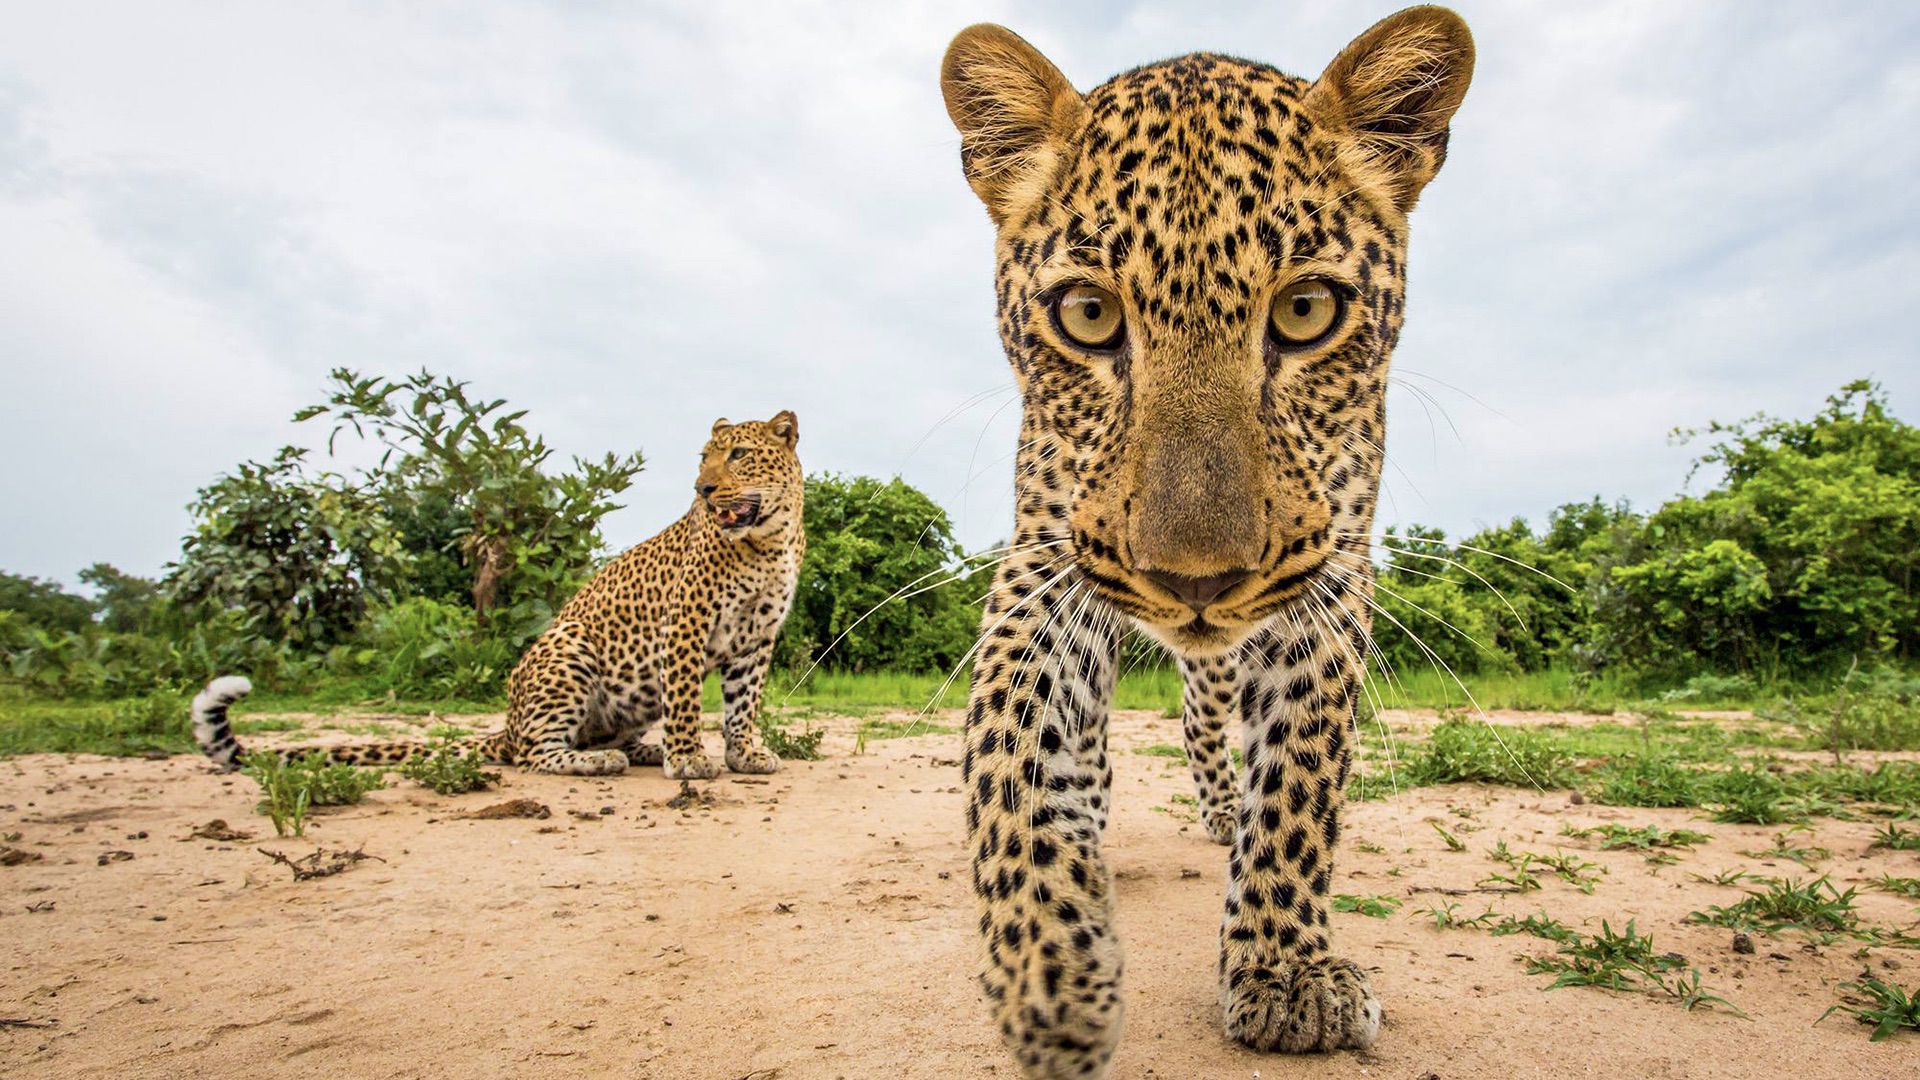 20 wildlife photos that show how beautiful the animal kingdom is